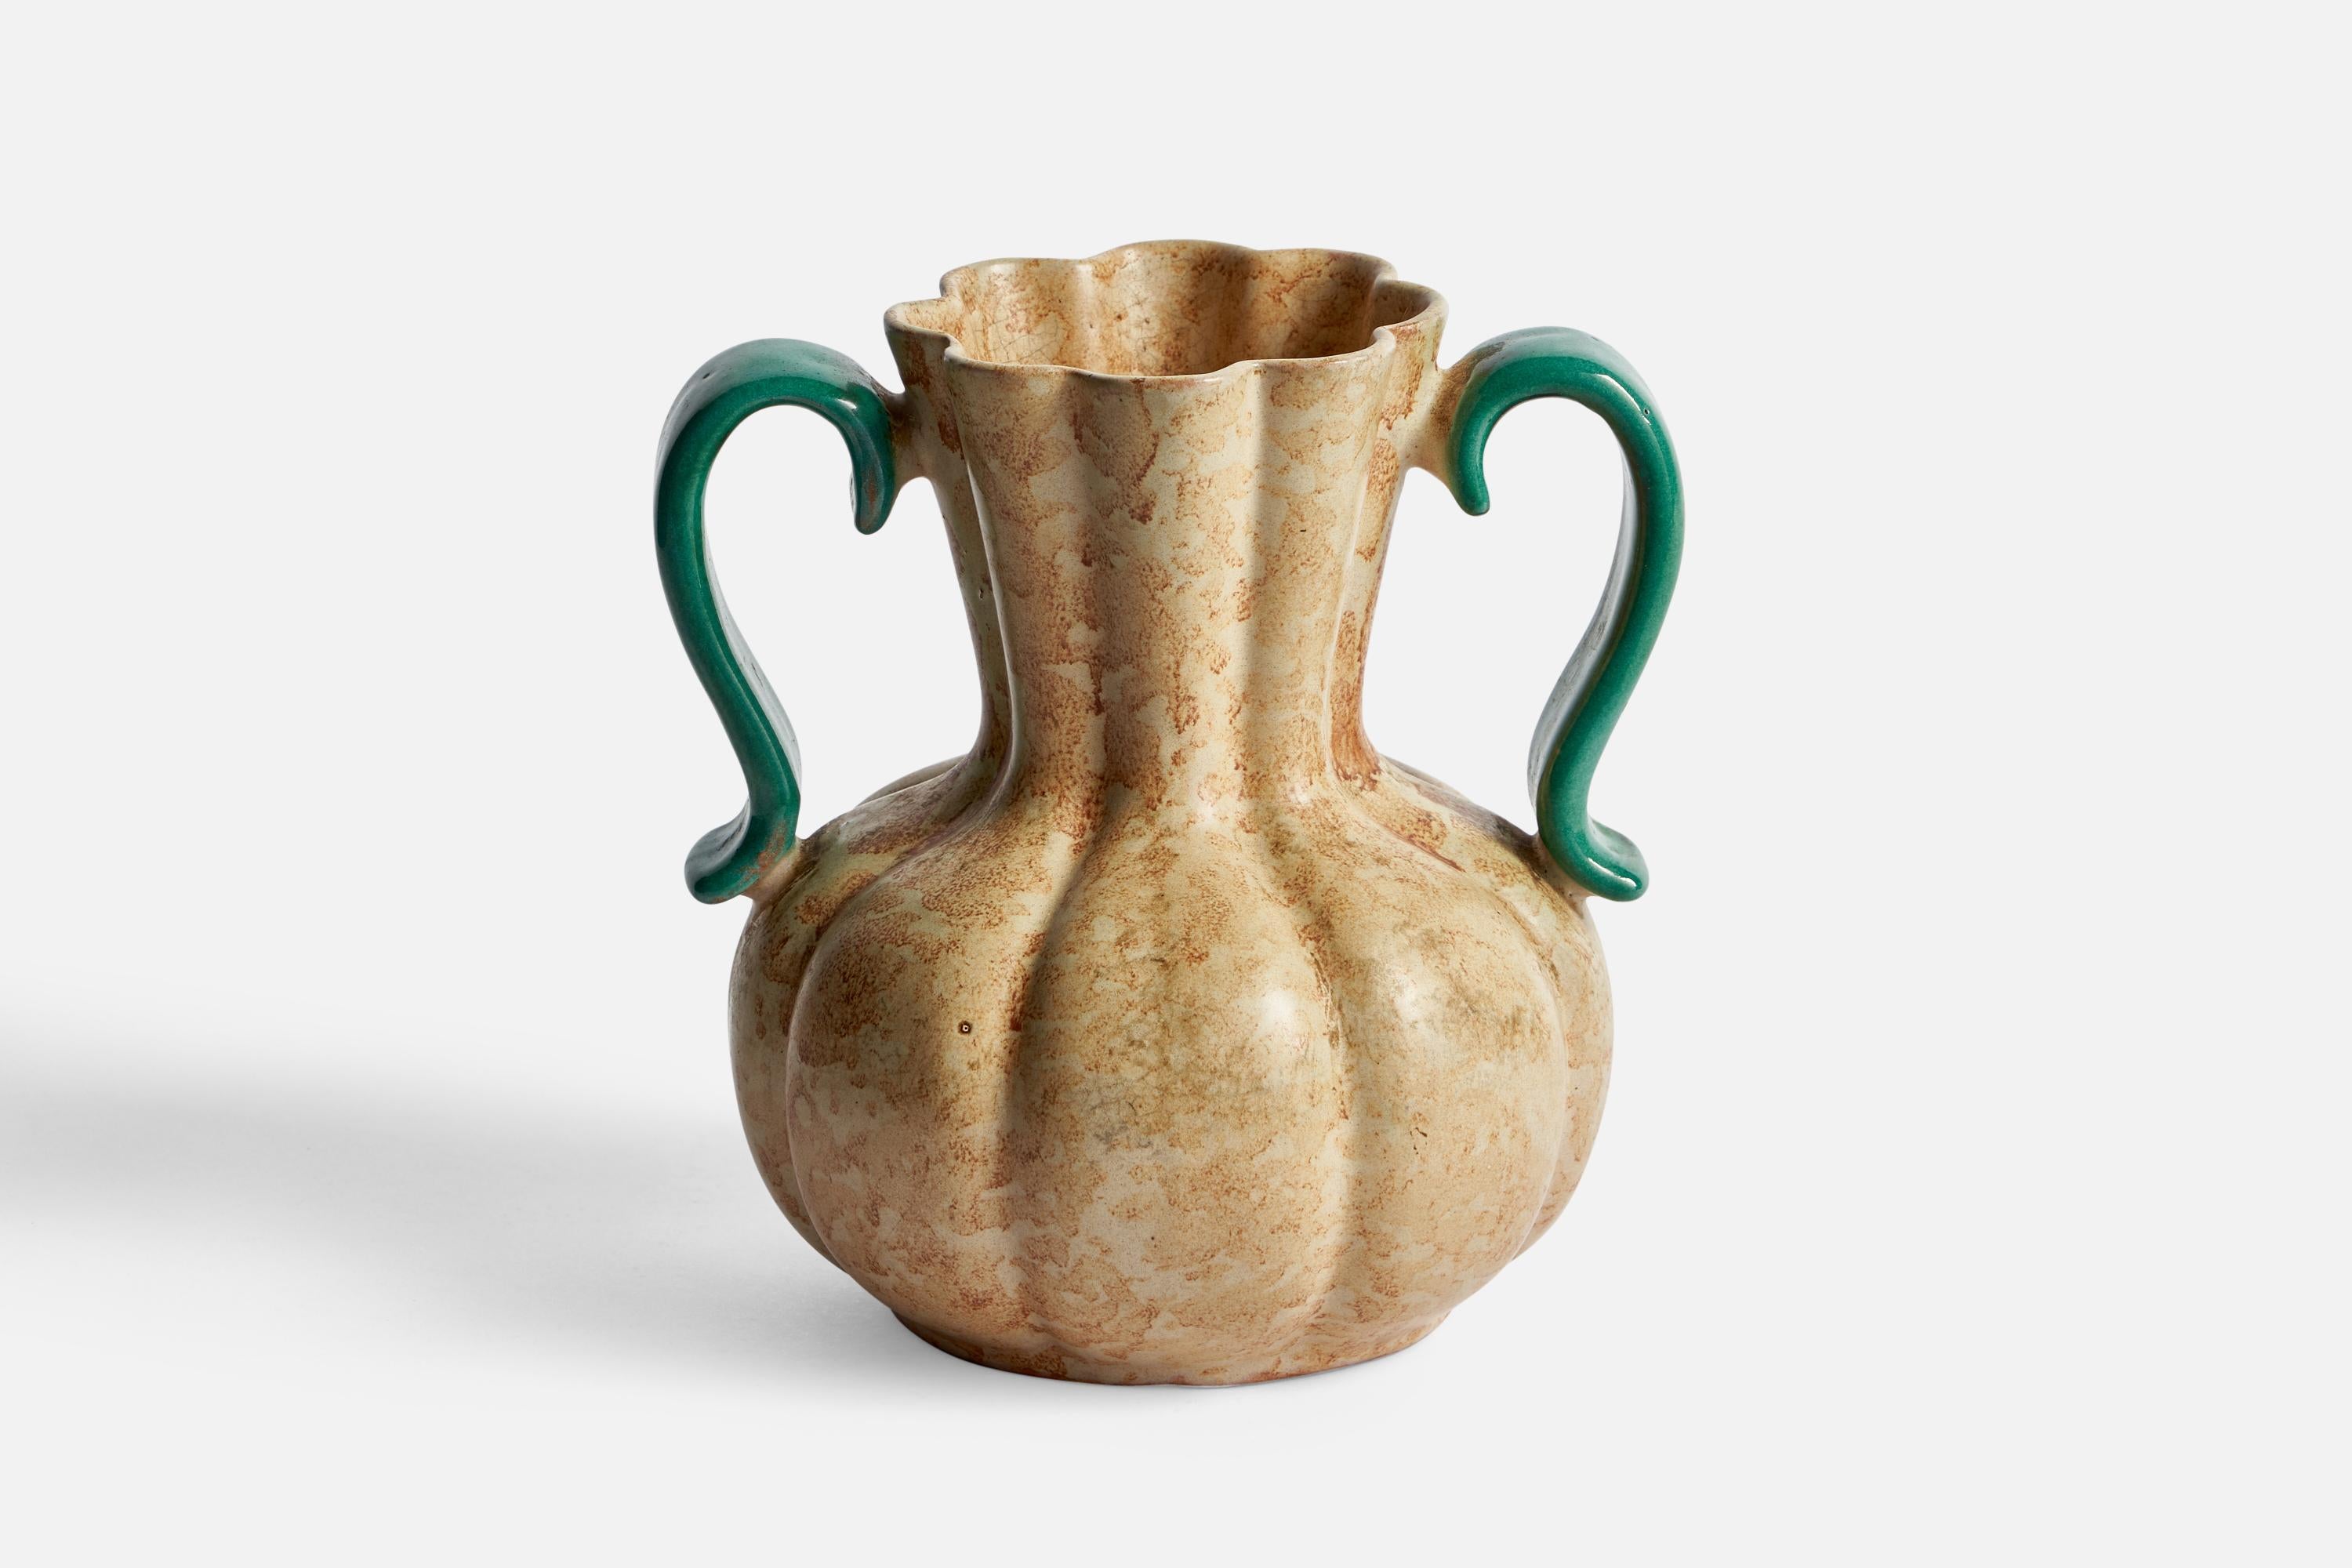 A beige and green-glazed earthenware vase designed and produced by Upsala Ekeby, Sweden, 1930s.